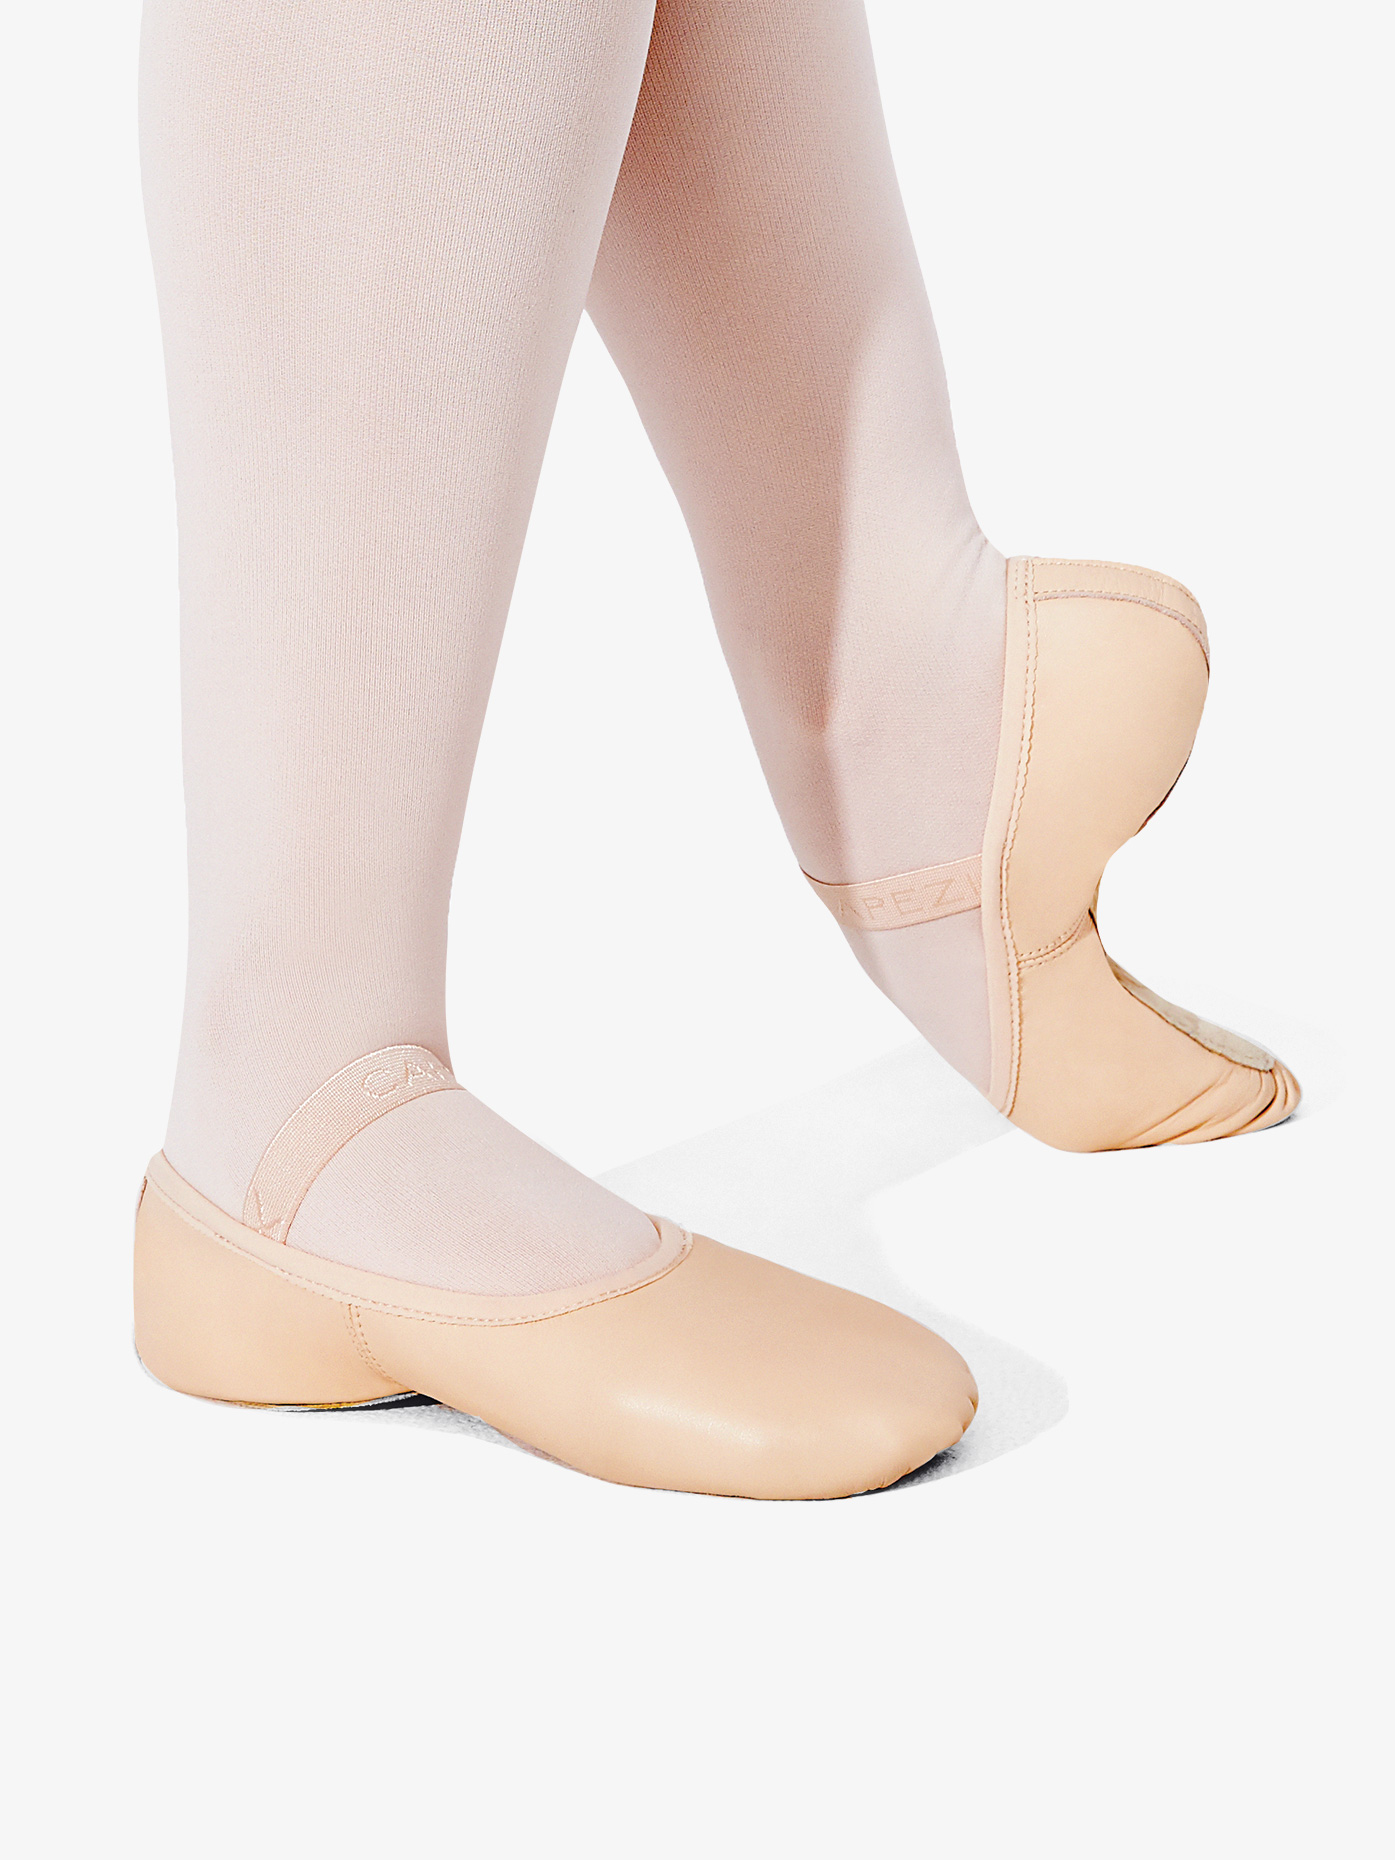 Capezio Ballet Slippers Size Chart